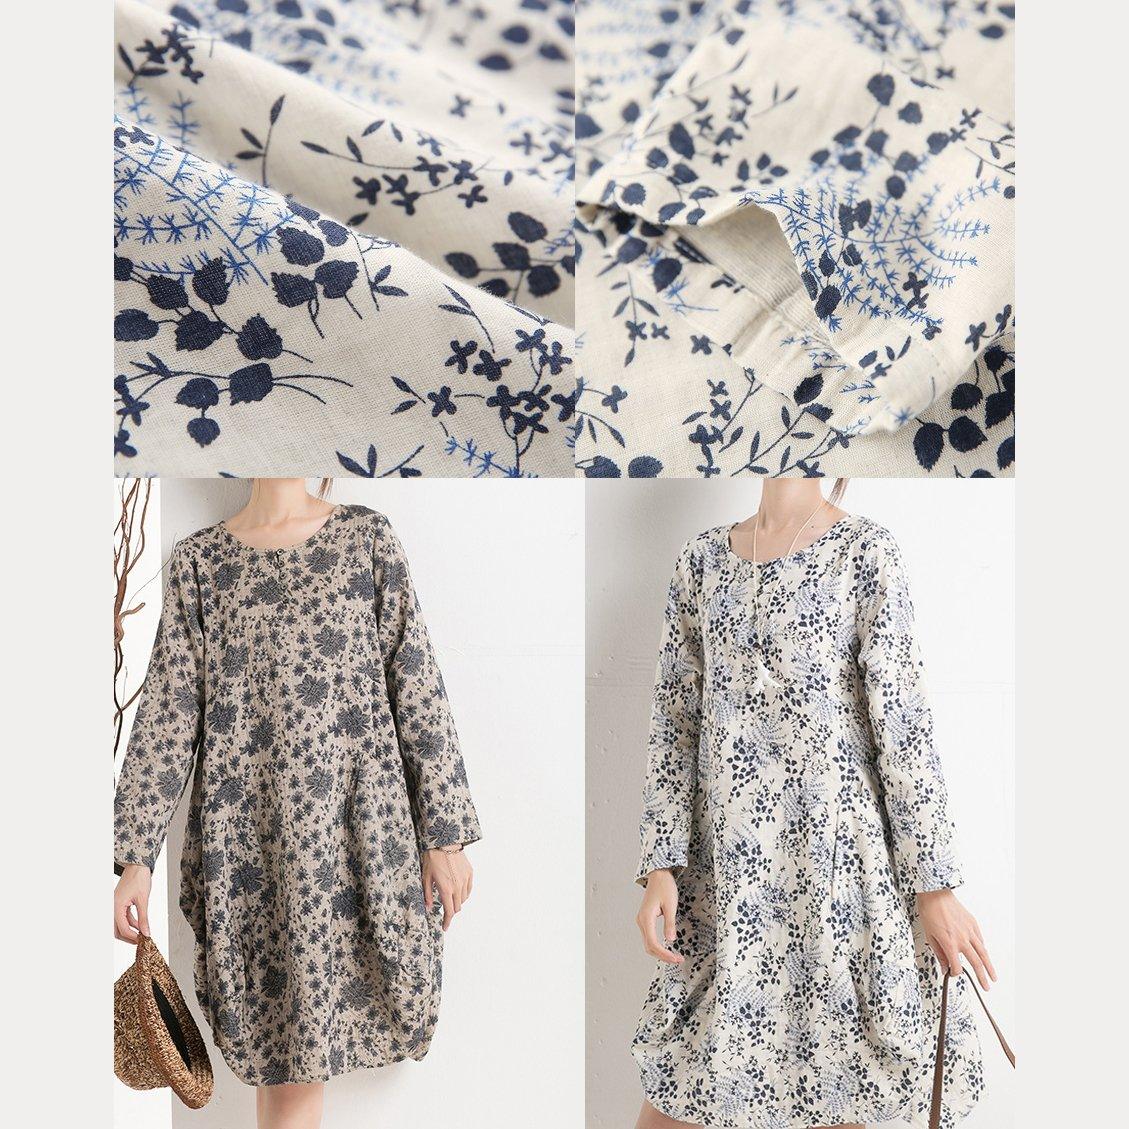 New print floral sundress long sleeve summer dresses spring cotton blouse shirt - Omychic